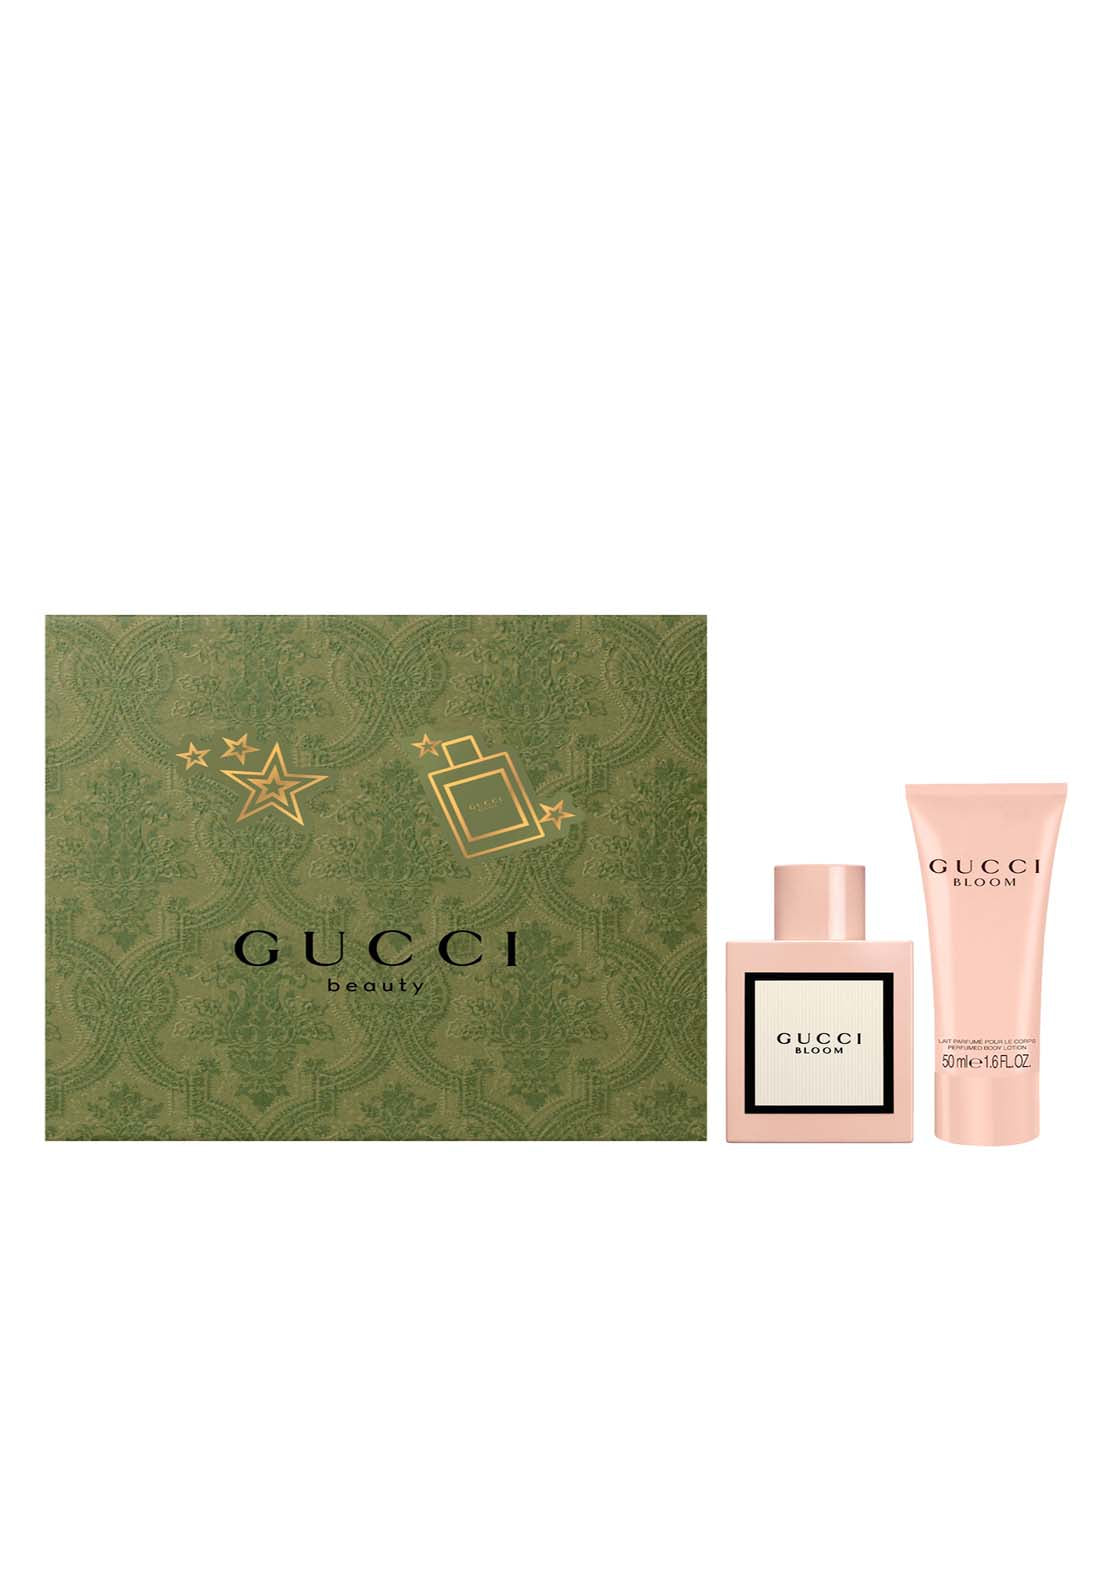 Gucci Bloom Eau de Parfum 50ml Giftset 1 Shaws Department Stores